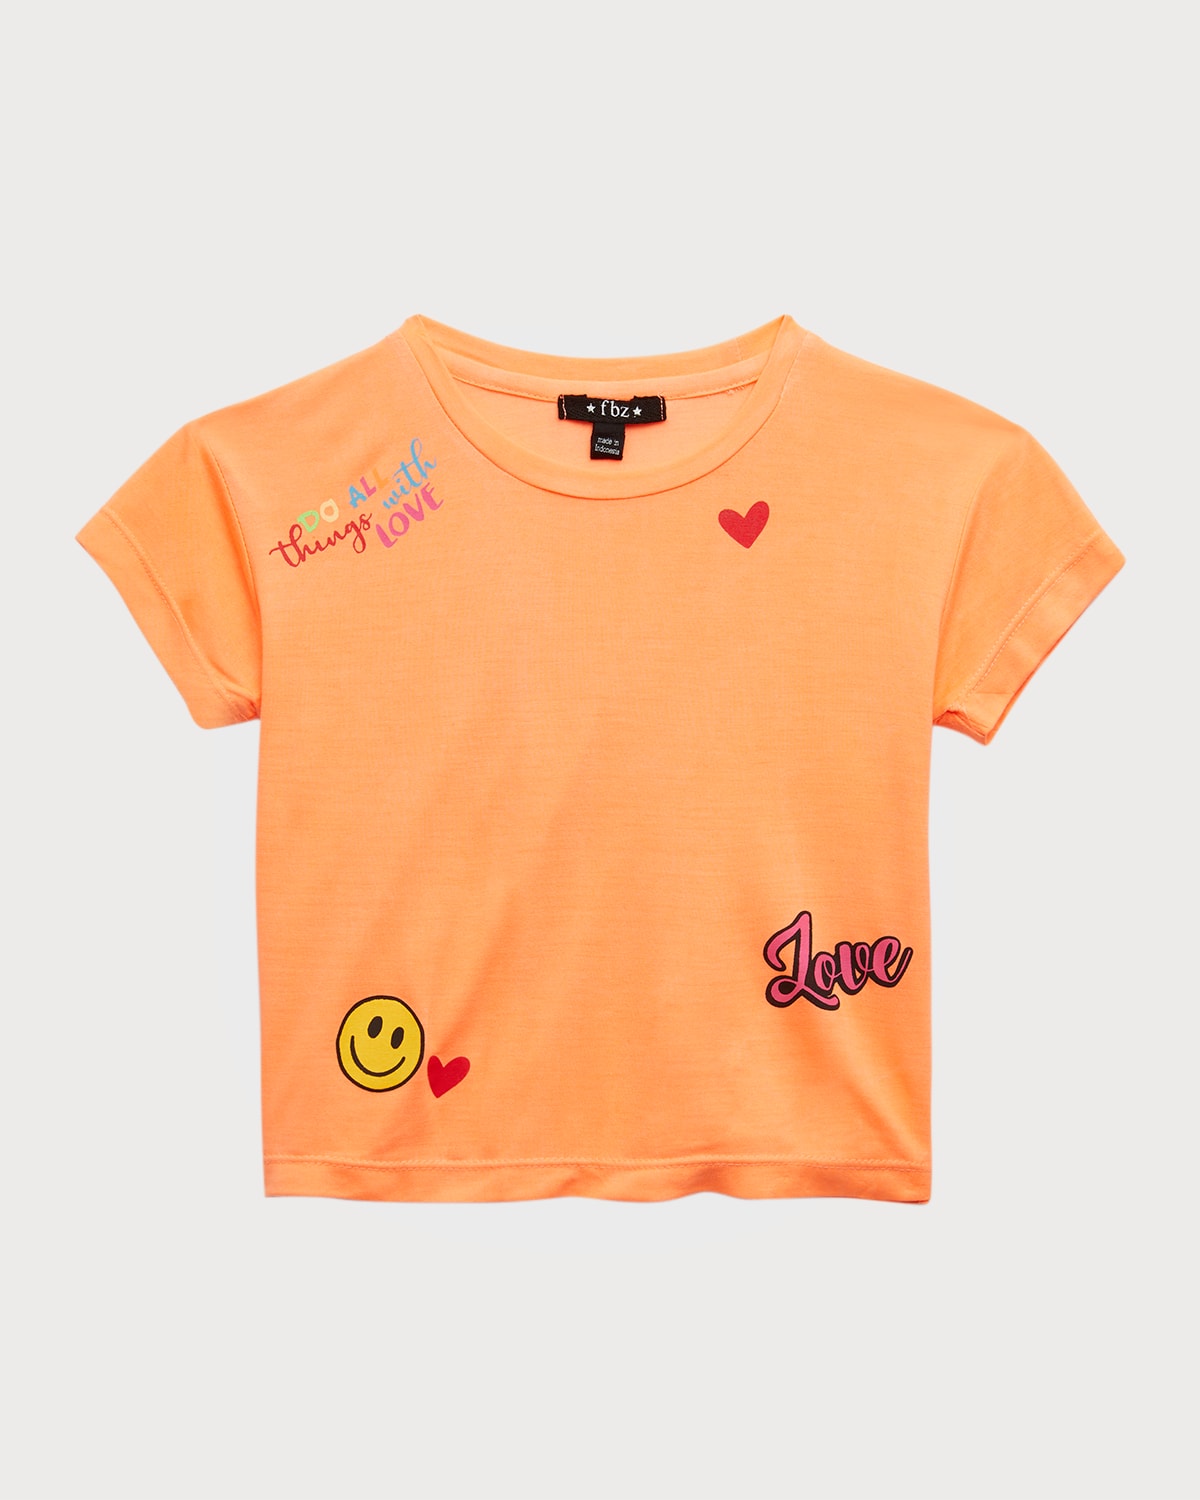 Flowers By Zoe Kids' Girl's Graphic Love T-shirt In Orange